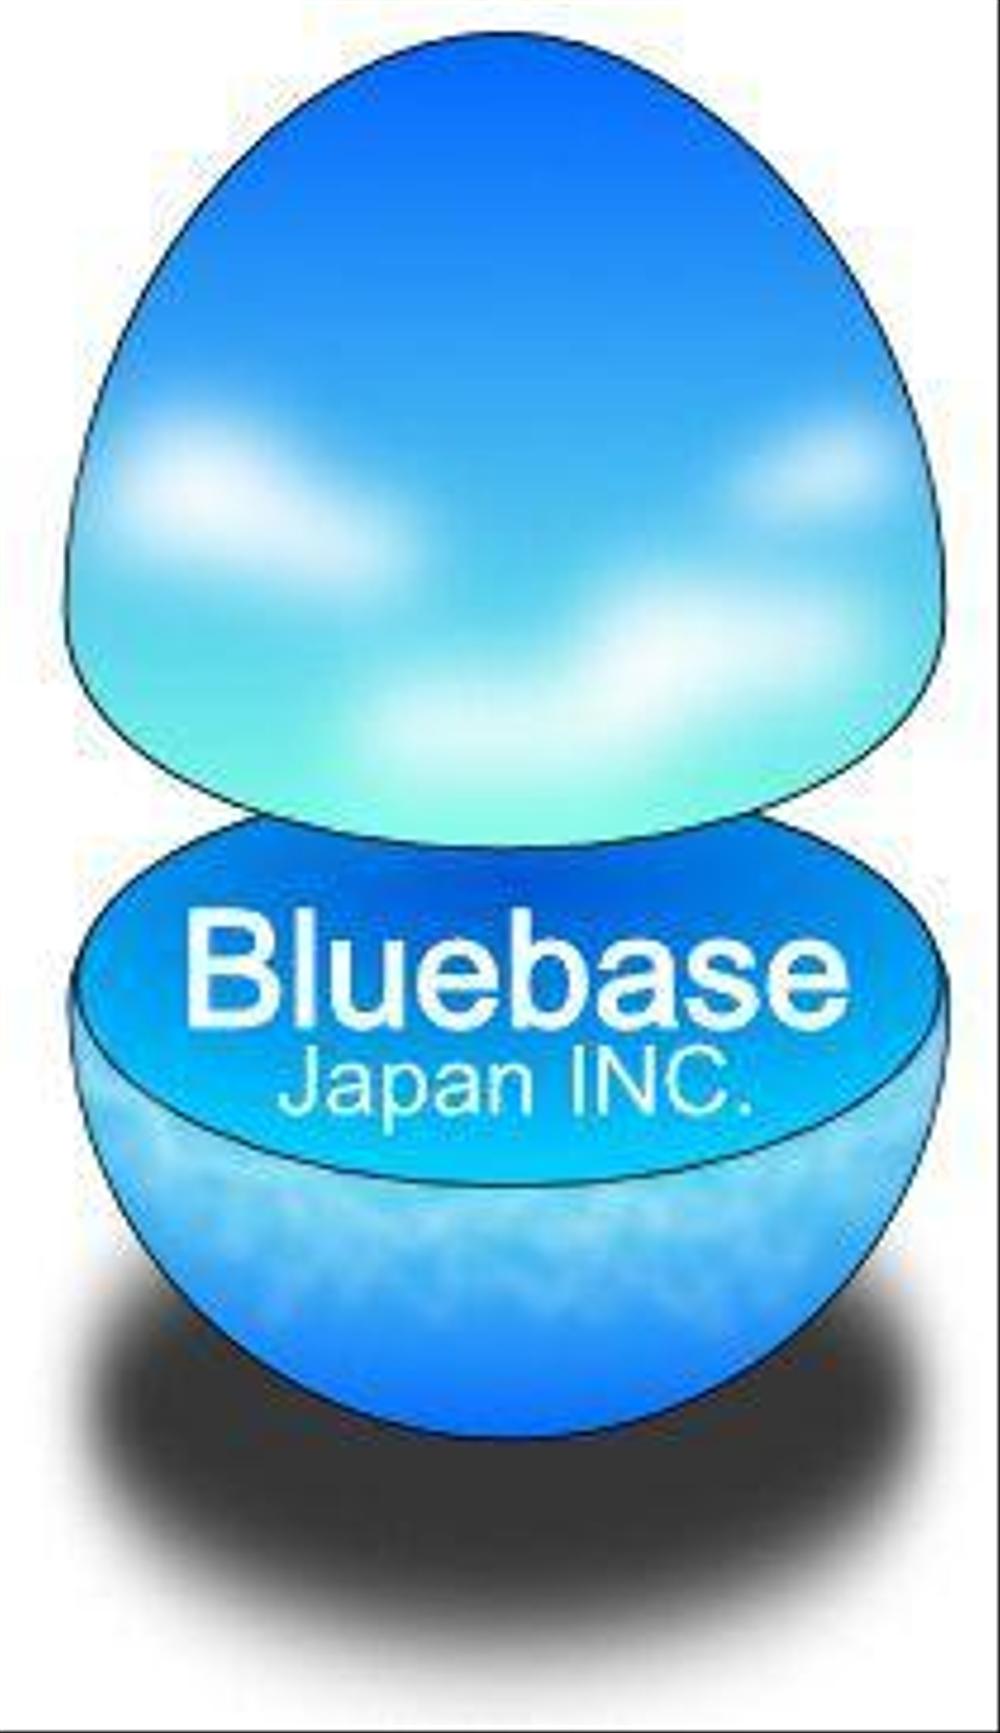 bluebase-01.jpg